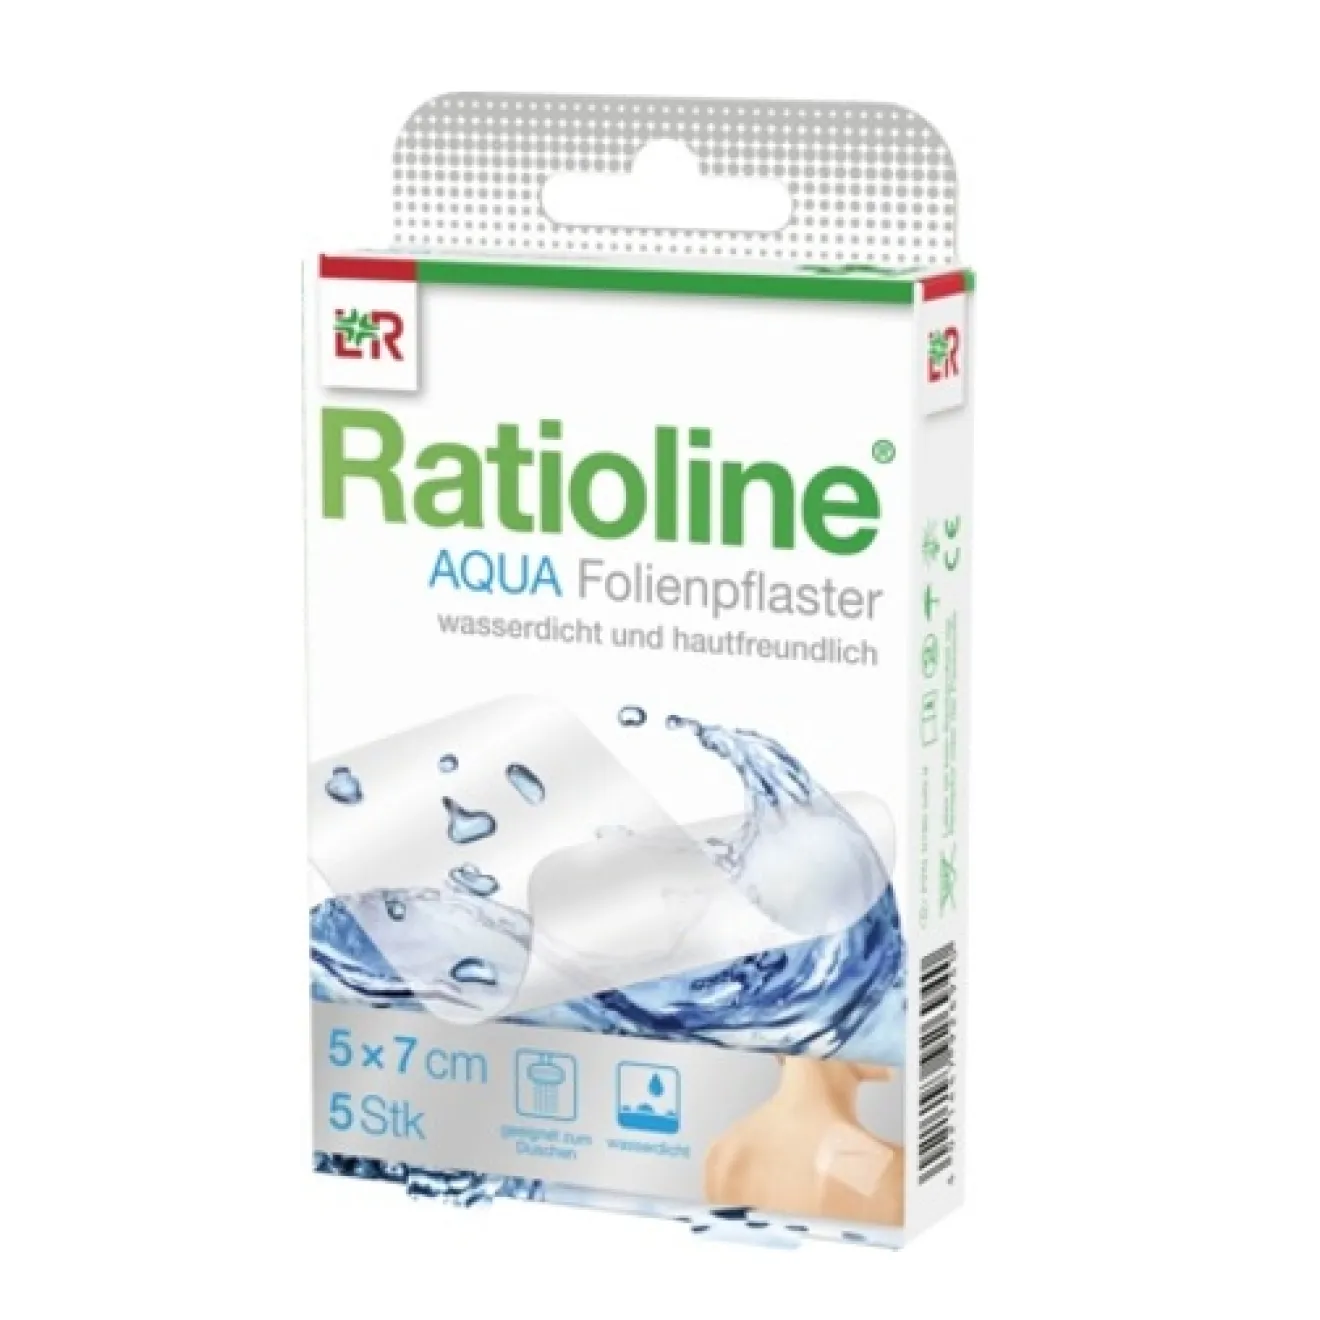 RATIOLINE aqua Duschpflaster Plus 5x7 cm steril 5 ST